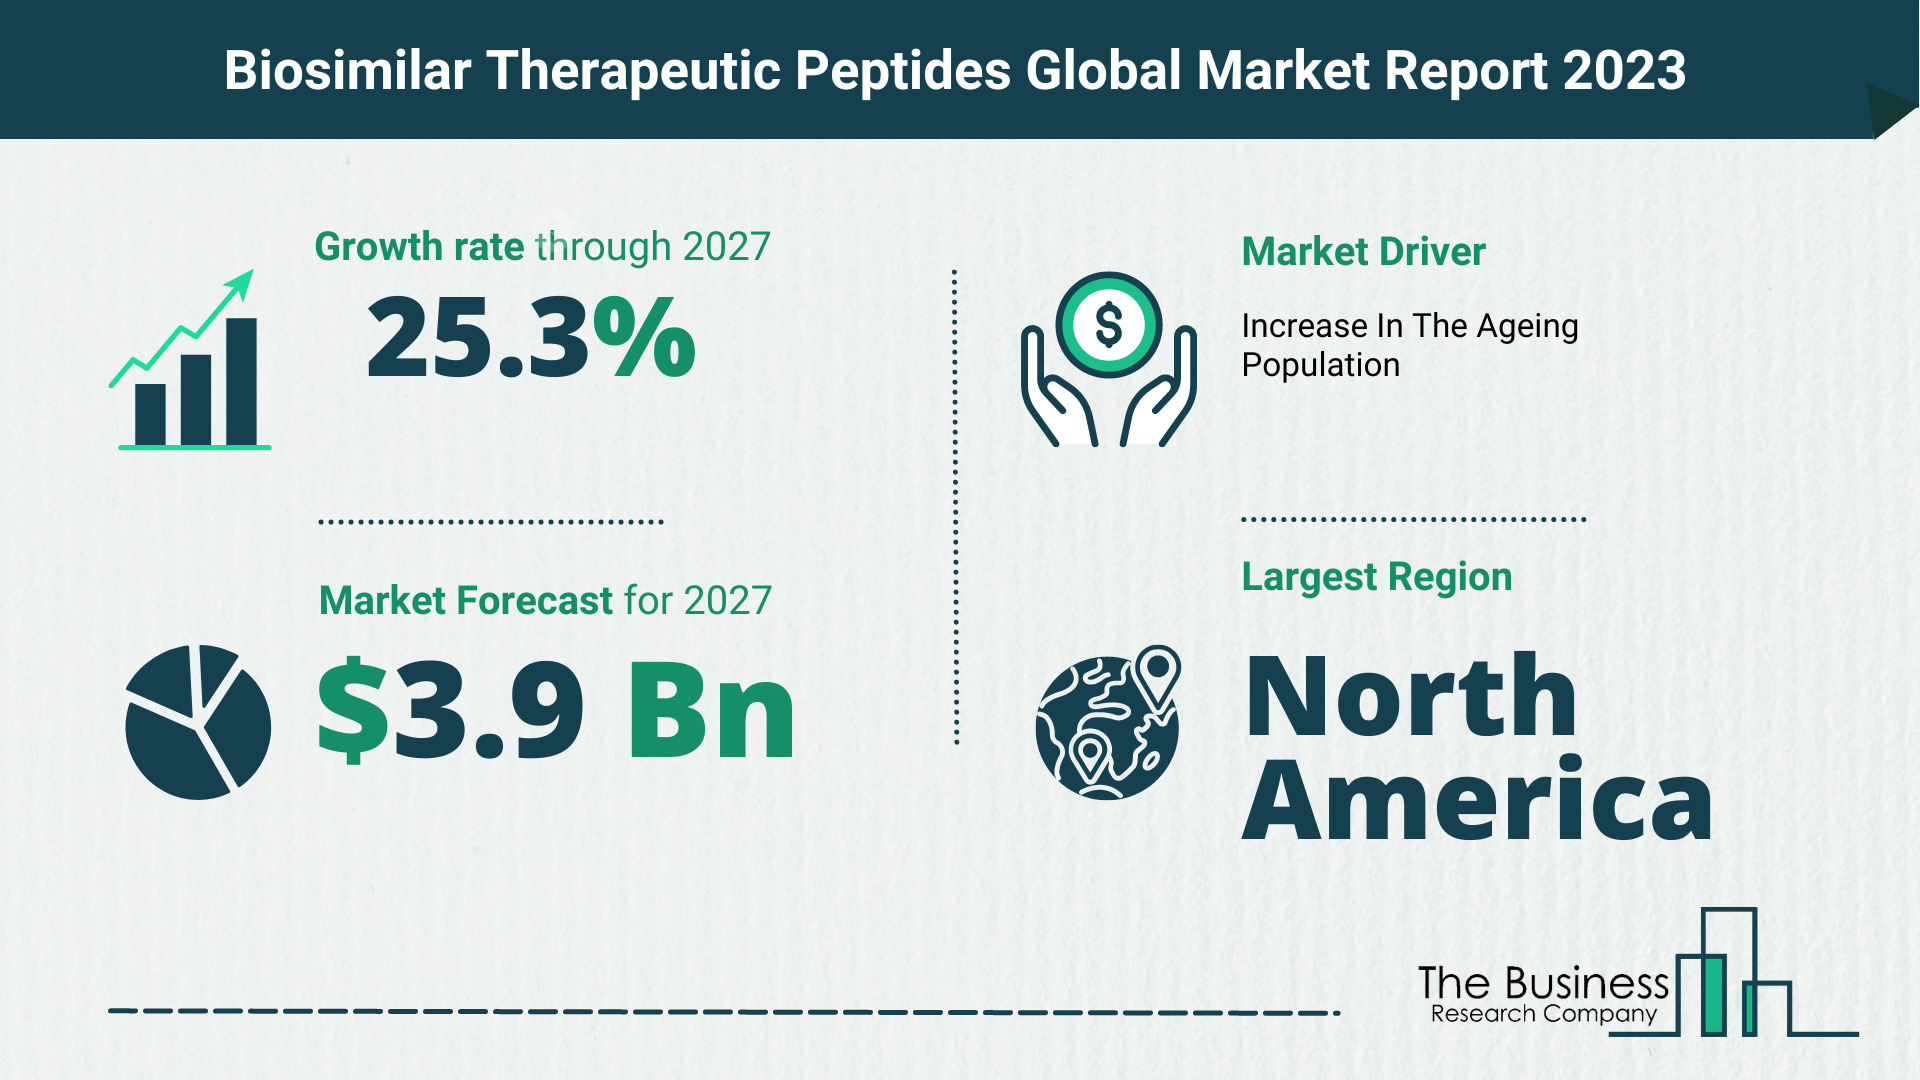 Global Biosimilar Therapeutic Peptides Market